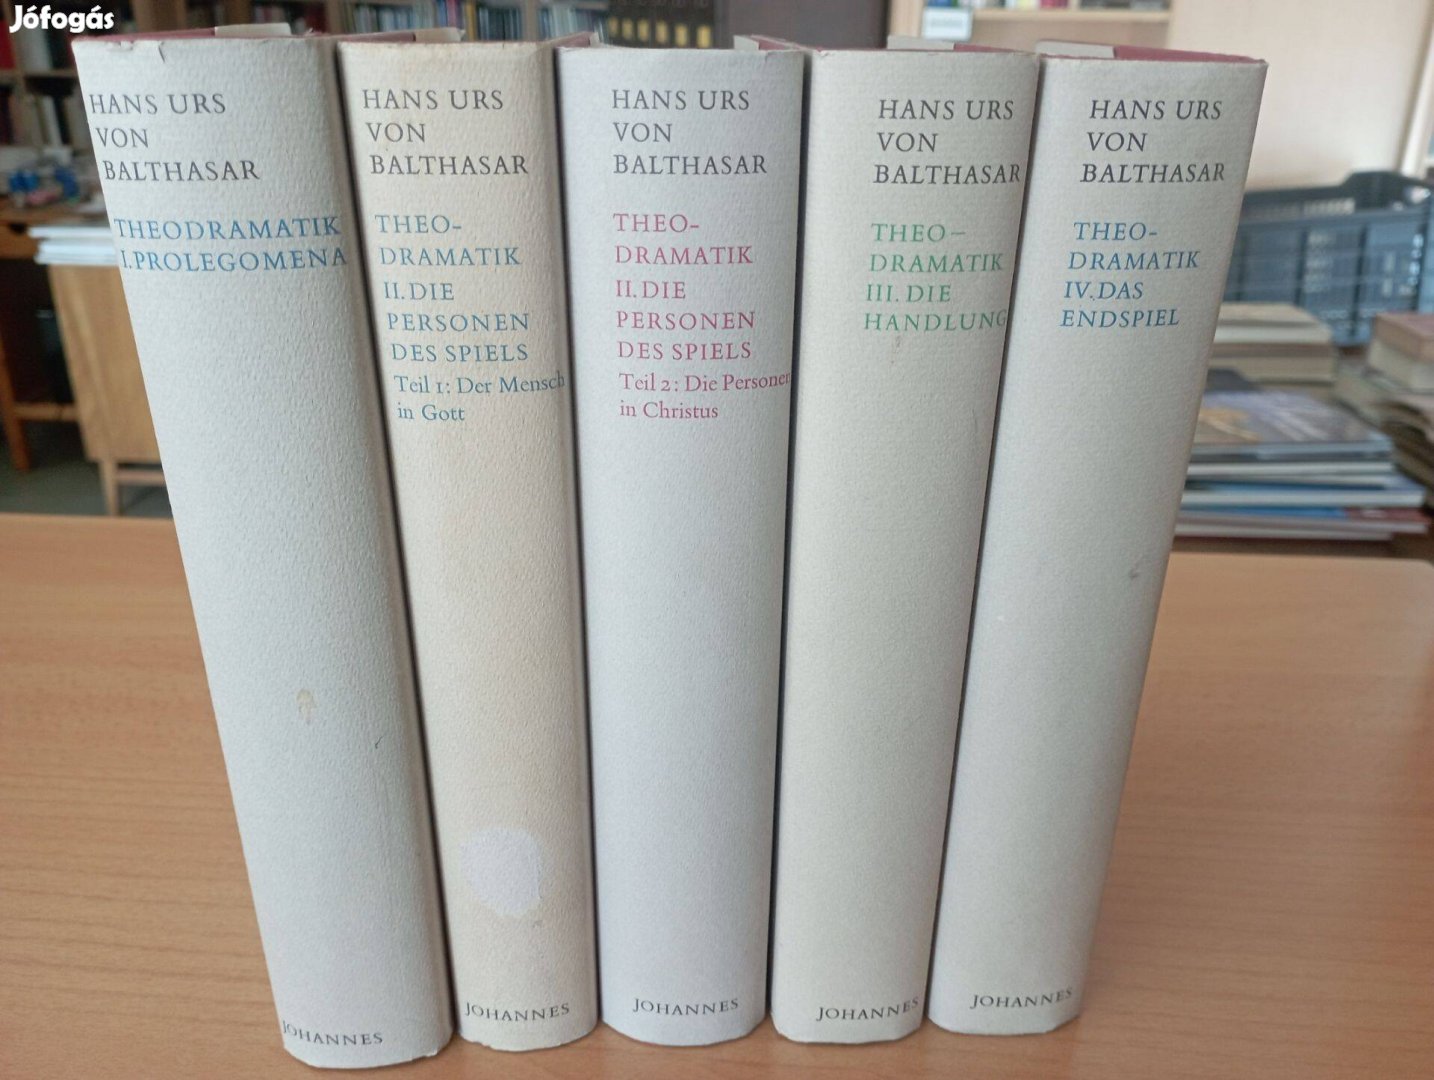 Hans Urs von Balthasar: Theodramatik I-V. kötet, teljes